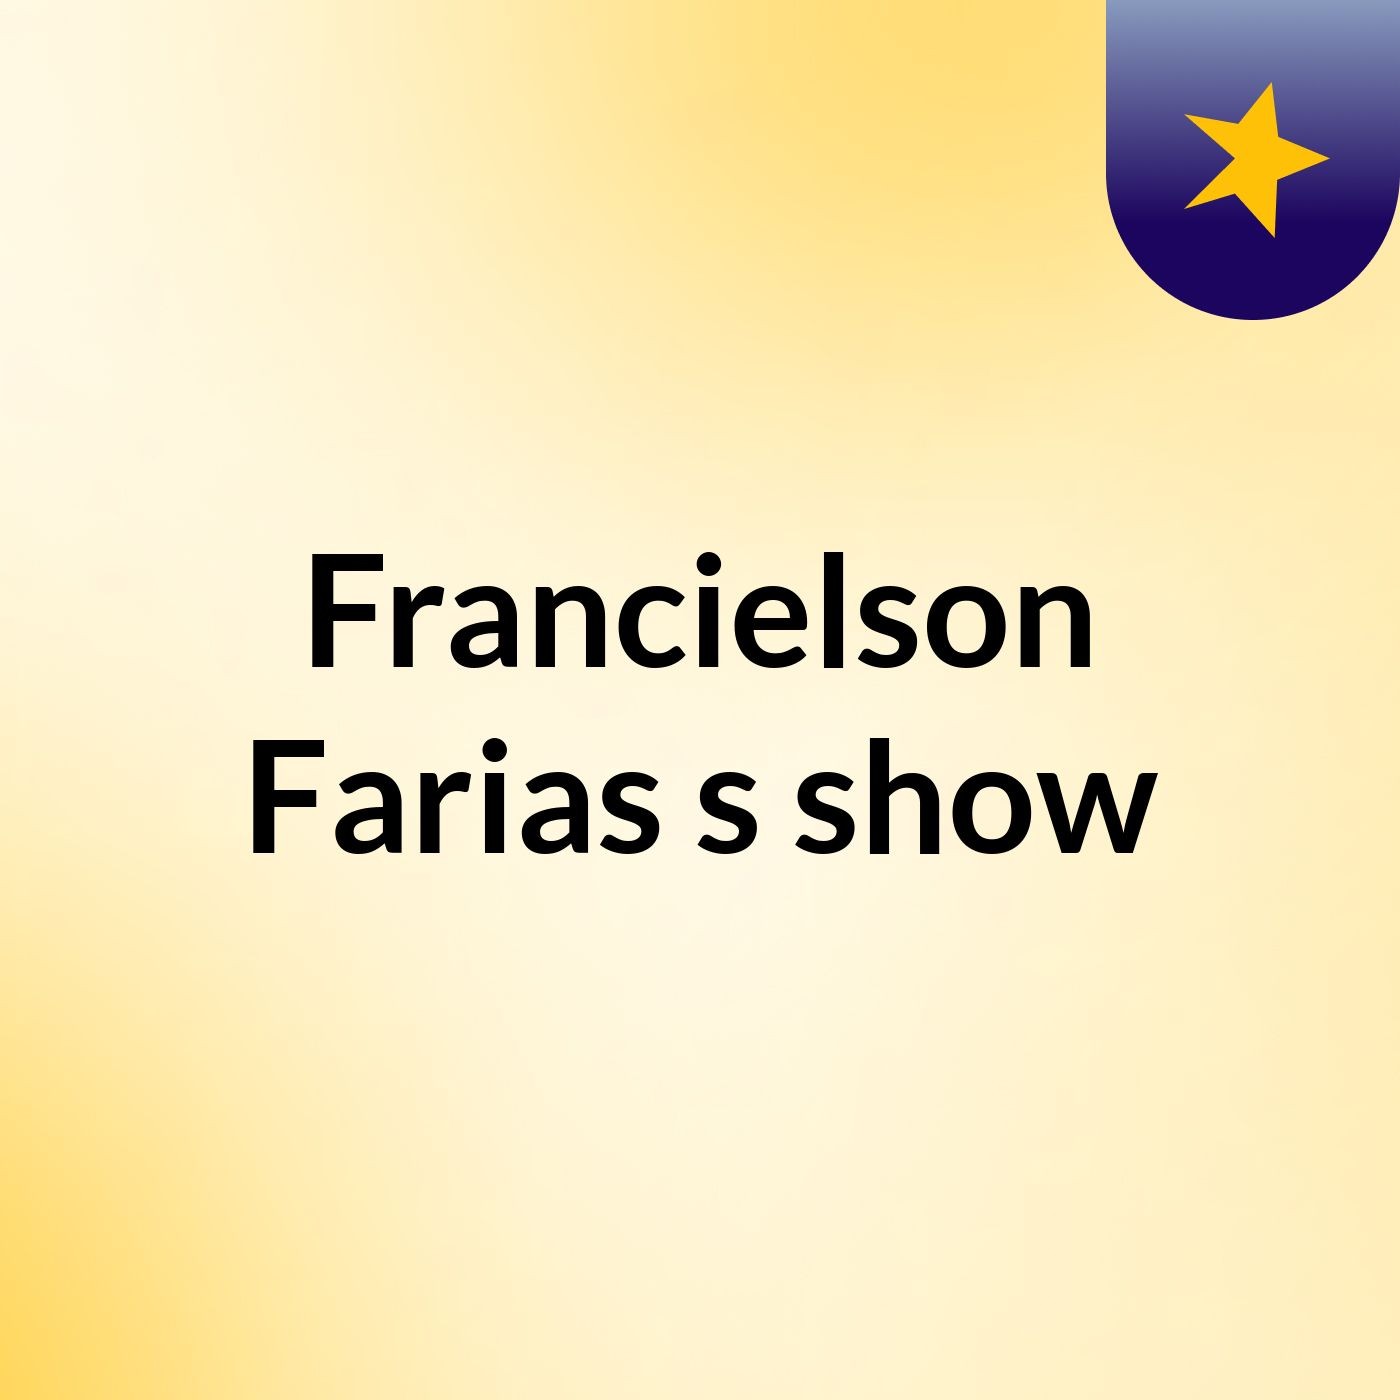 Francielson Farias's show